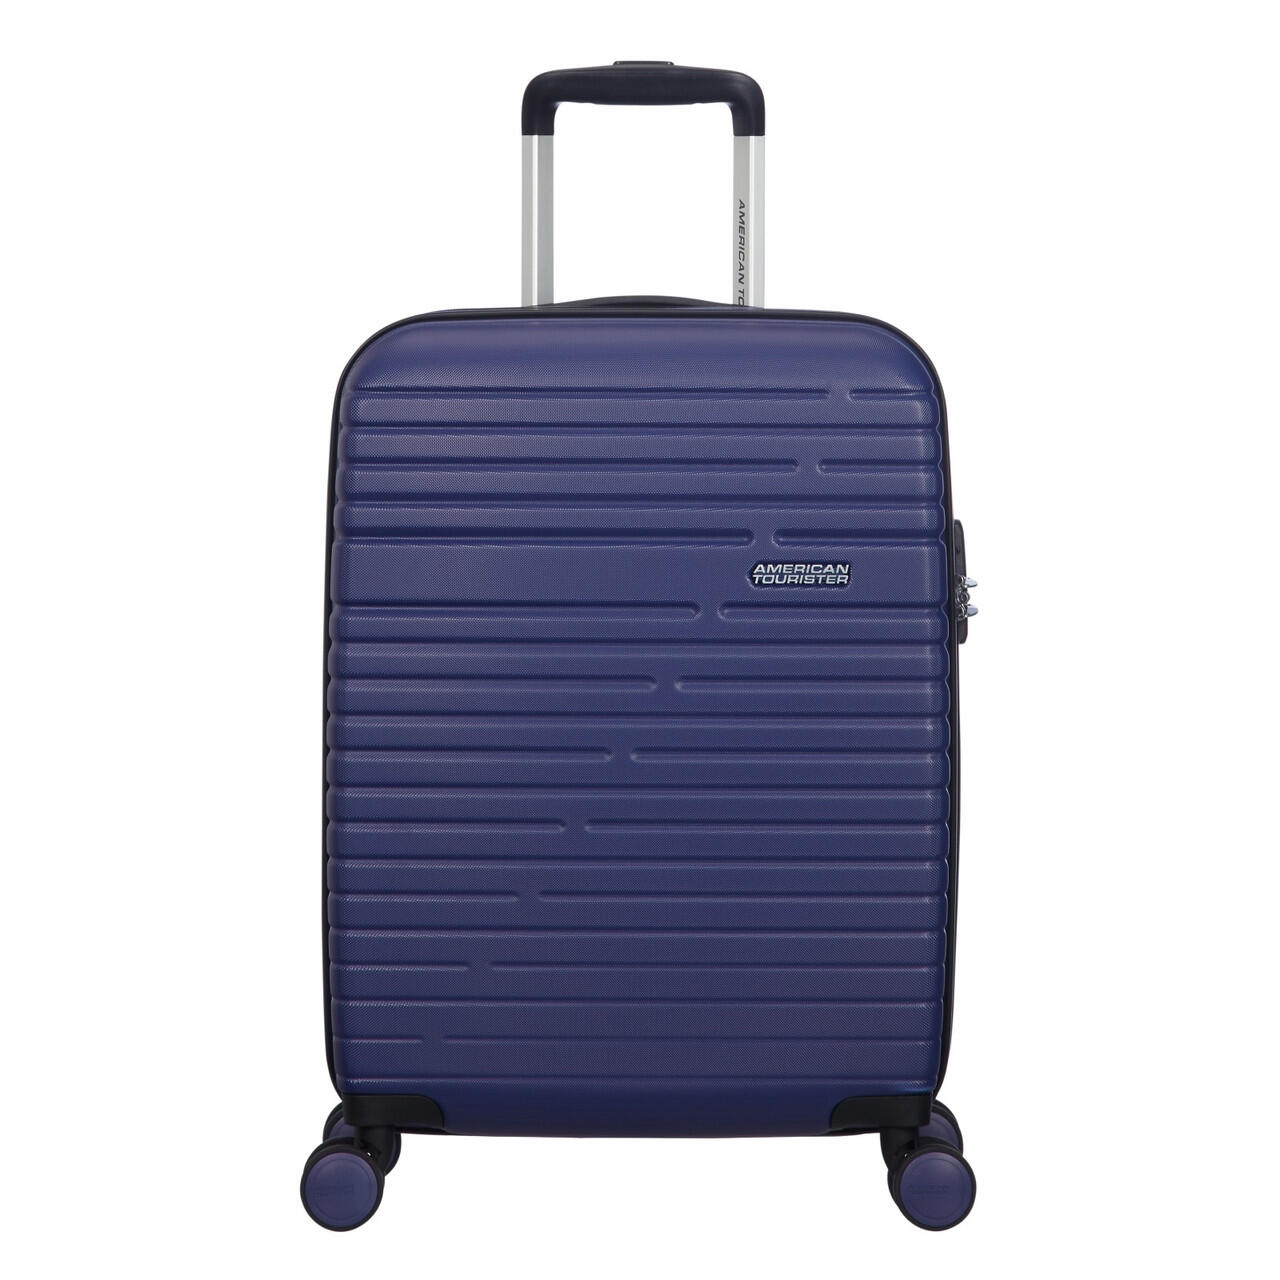 AMERICAN TOURISTER Aero Racer Cabin Suitcase - 55cm - Blue